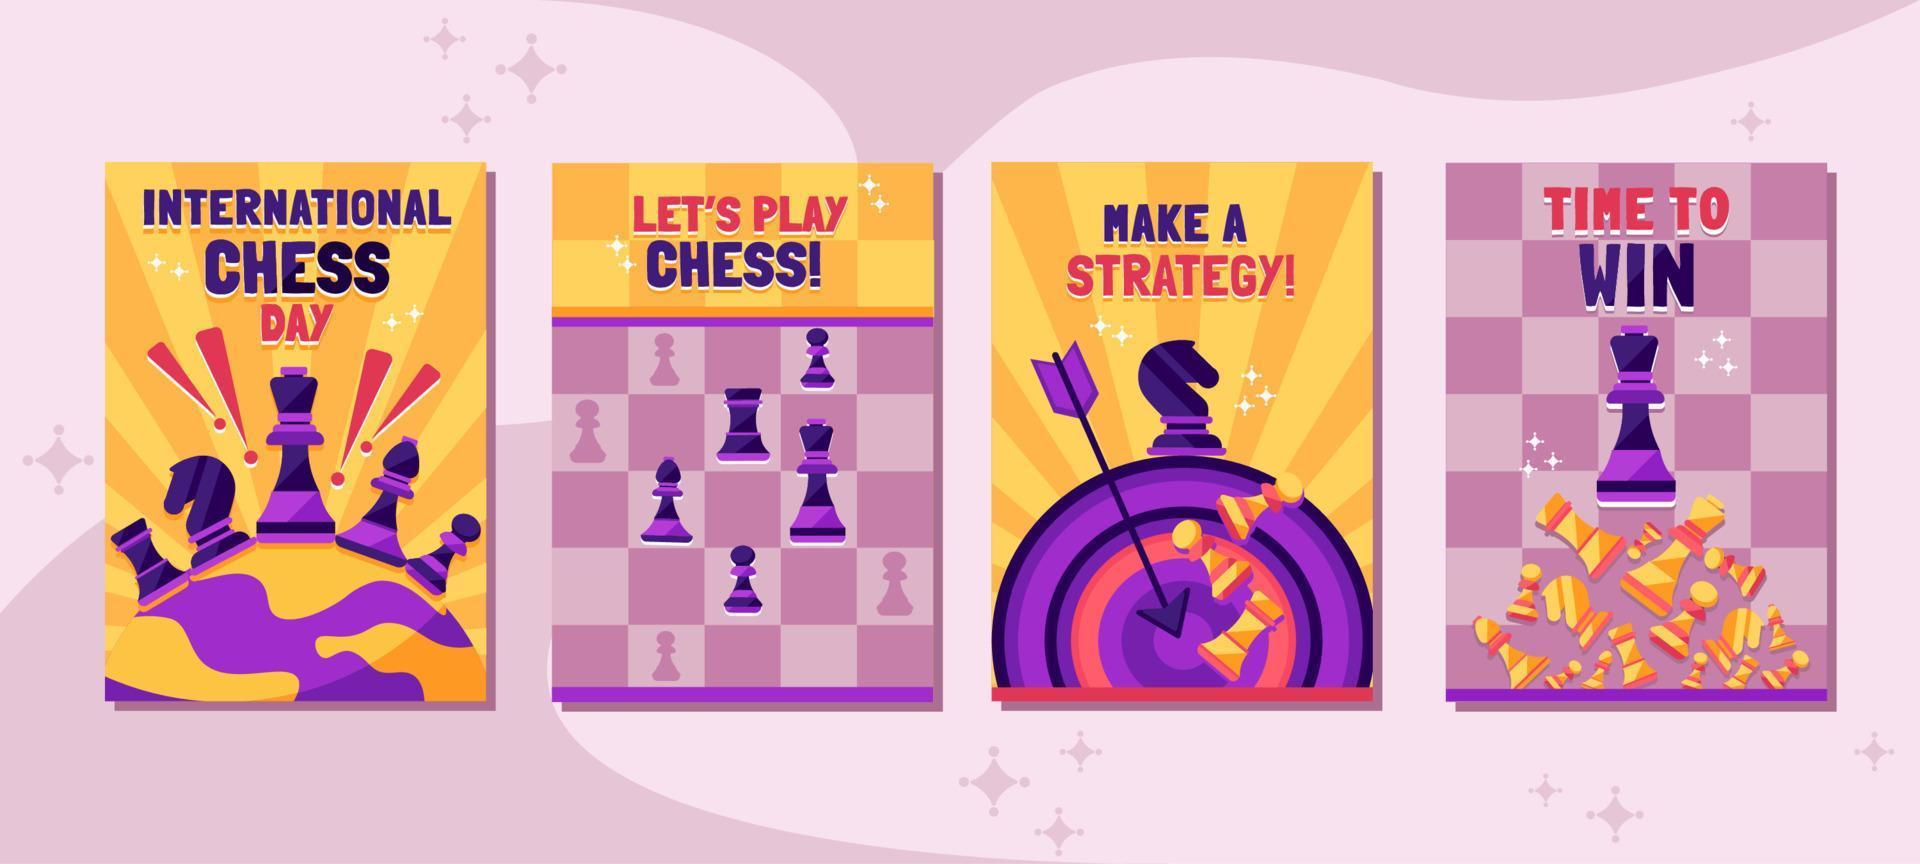 International Chess Day Card vector